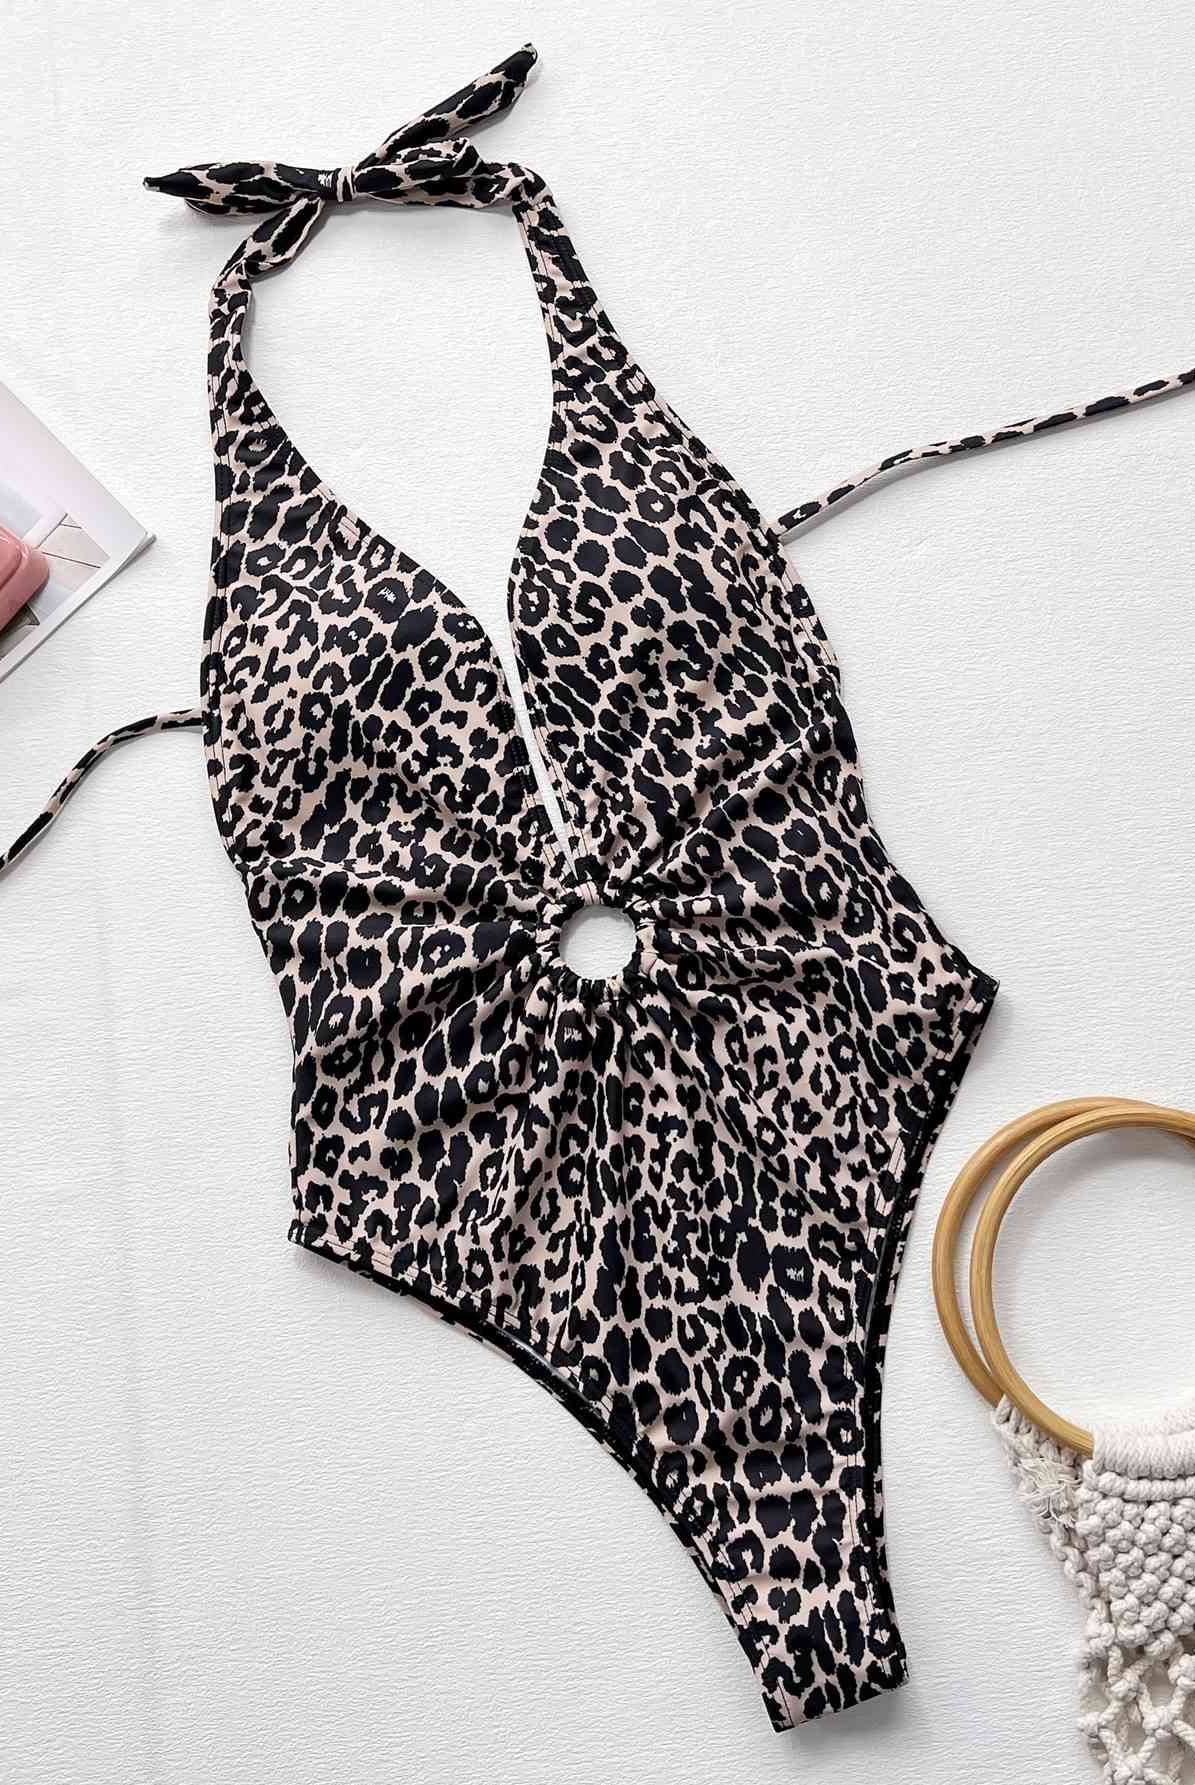 Black Leopard Halter Neck Ring Detail One-Piece Swimsuit Trends